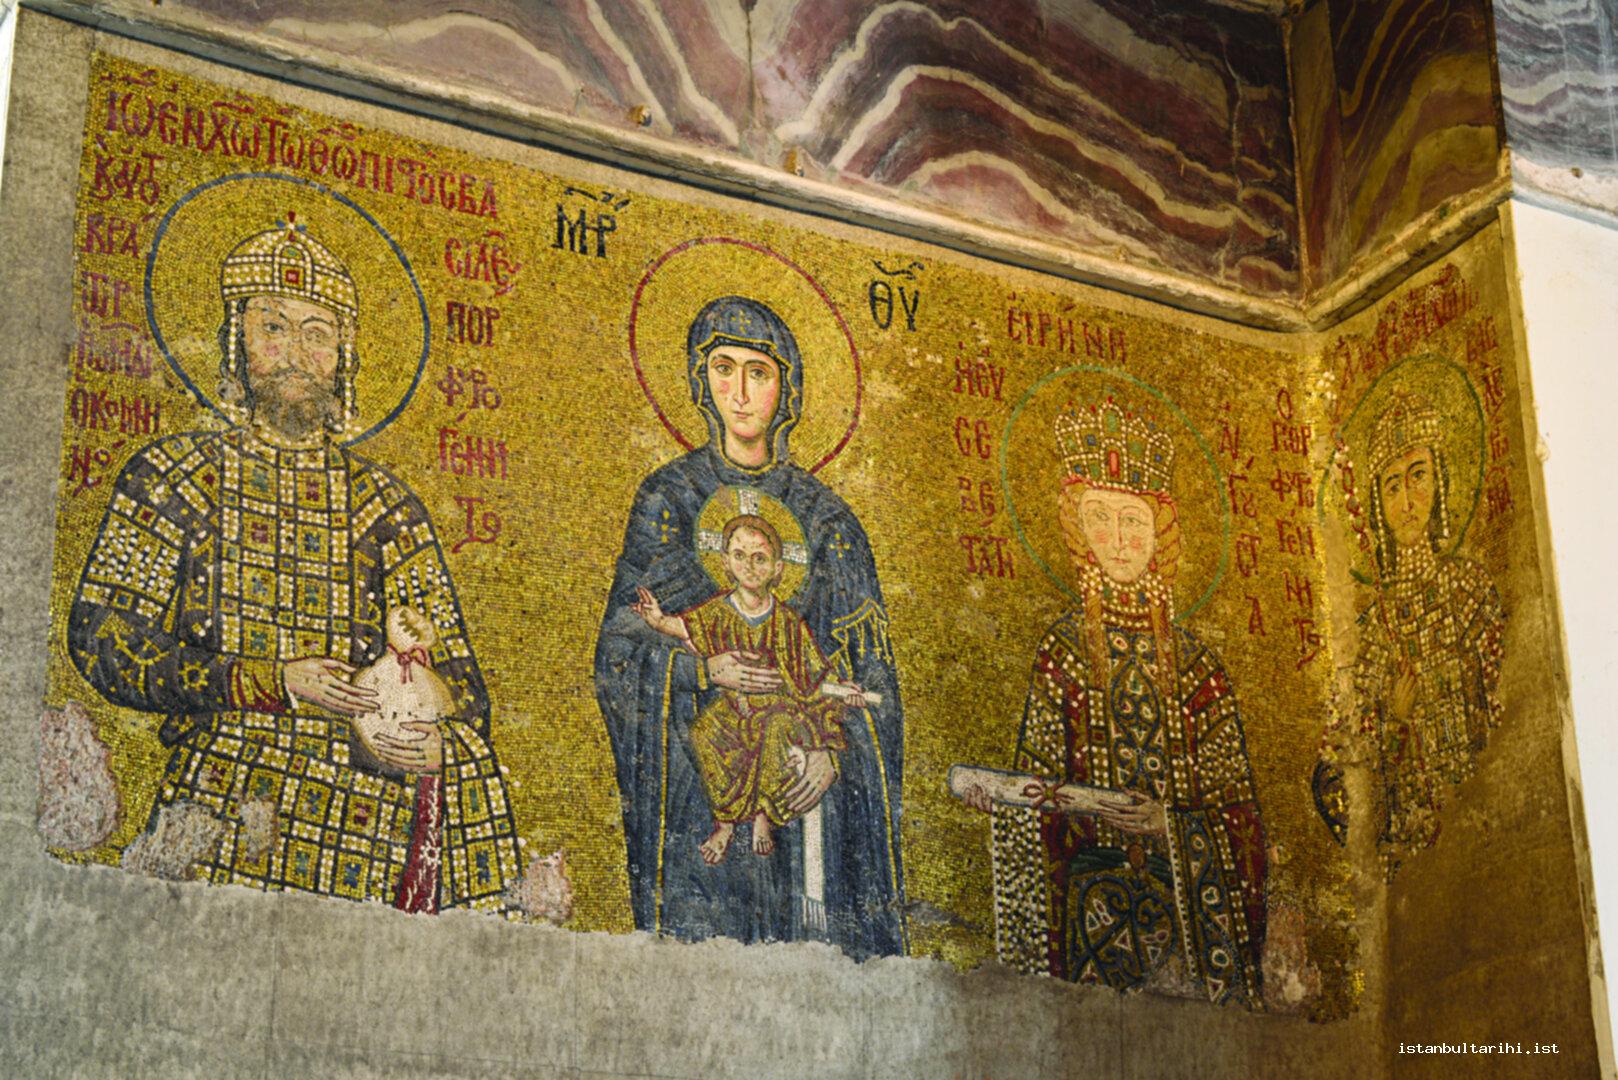 18- Emperor Ioannes Kommenos II, Empress Irene, and their son donating money to Hagia Sophia (Ayasofya)